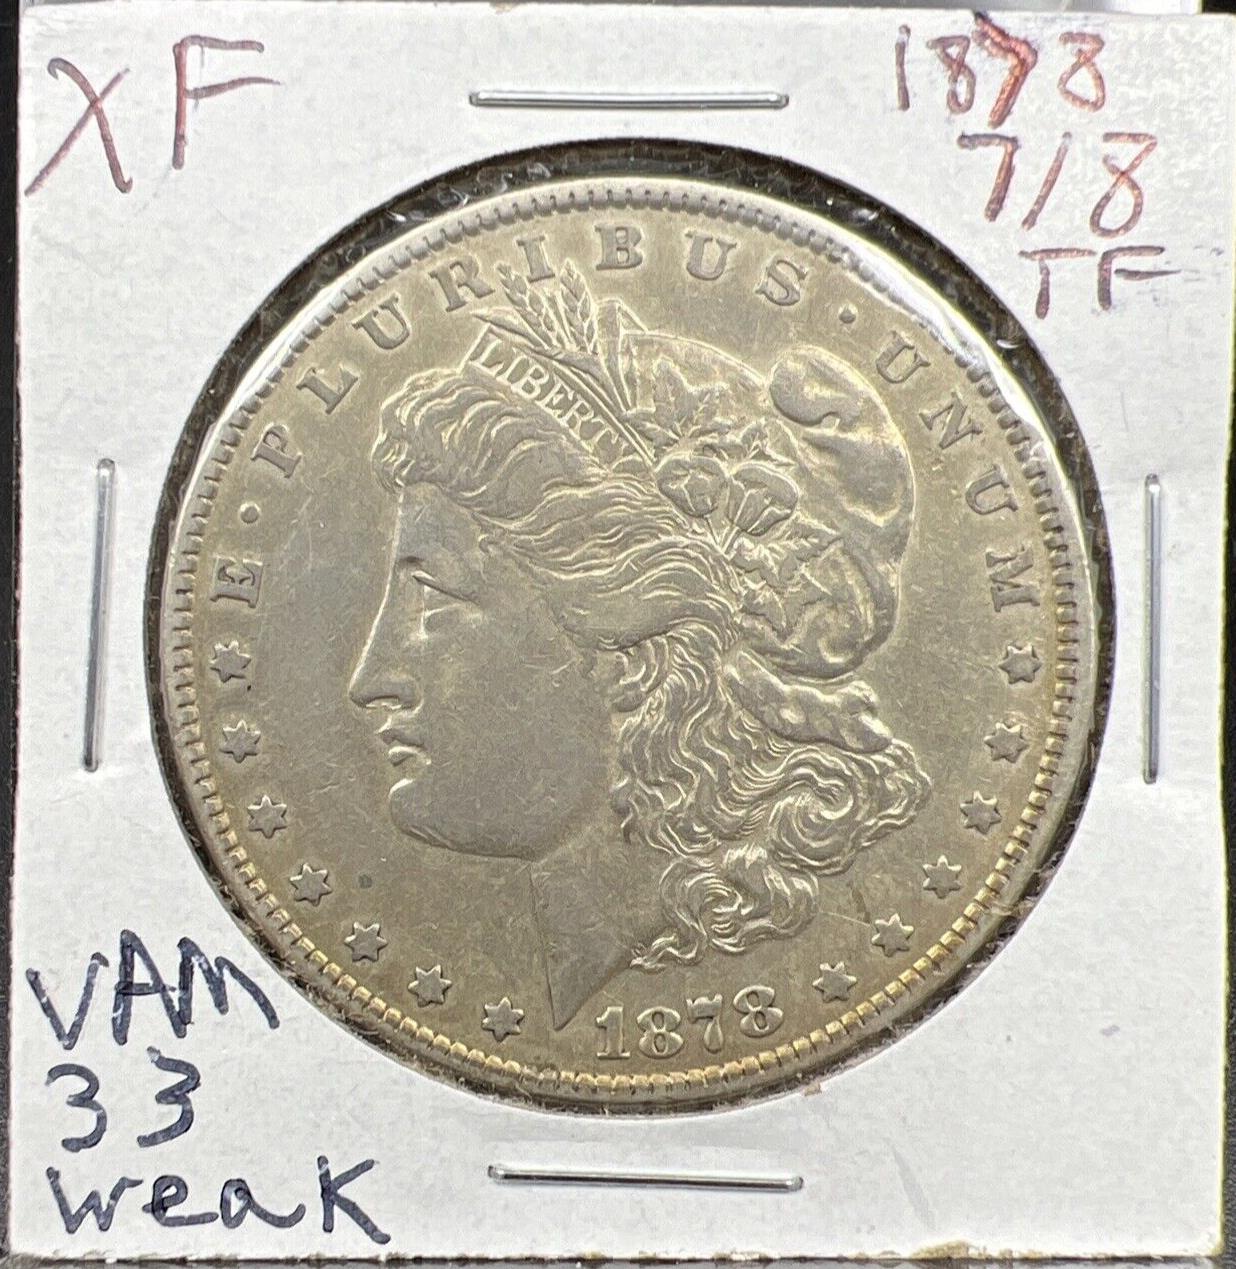 1878 P 7/8 TF Weak VAM 33A Rev 78 $1 Morgan Silver Dollar Coin XF EF